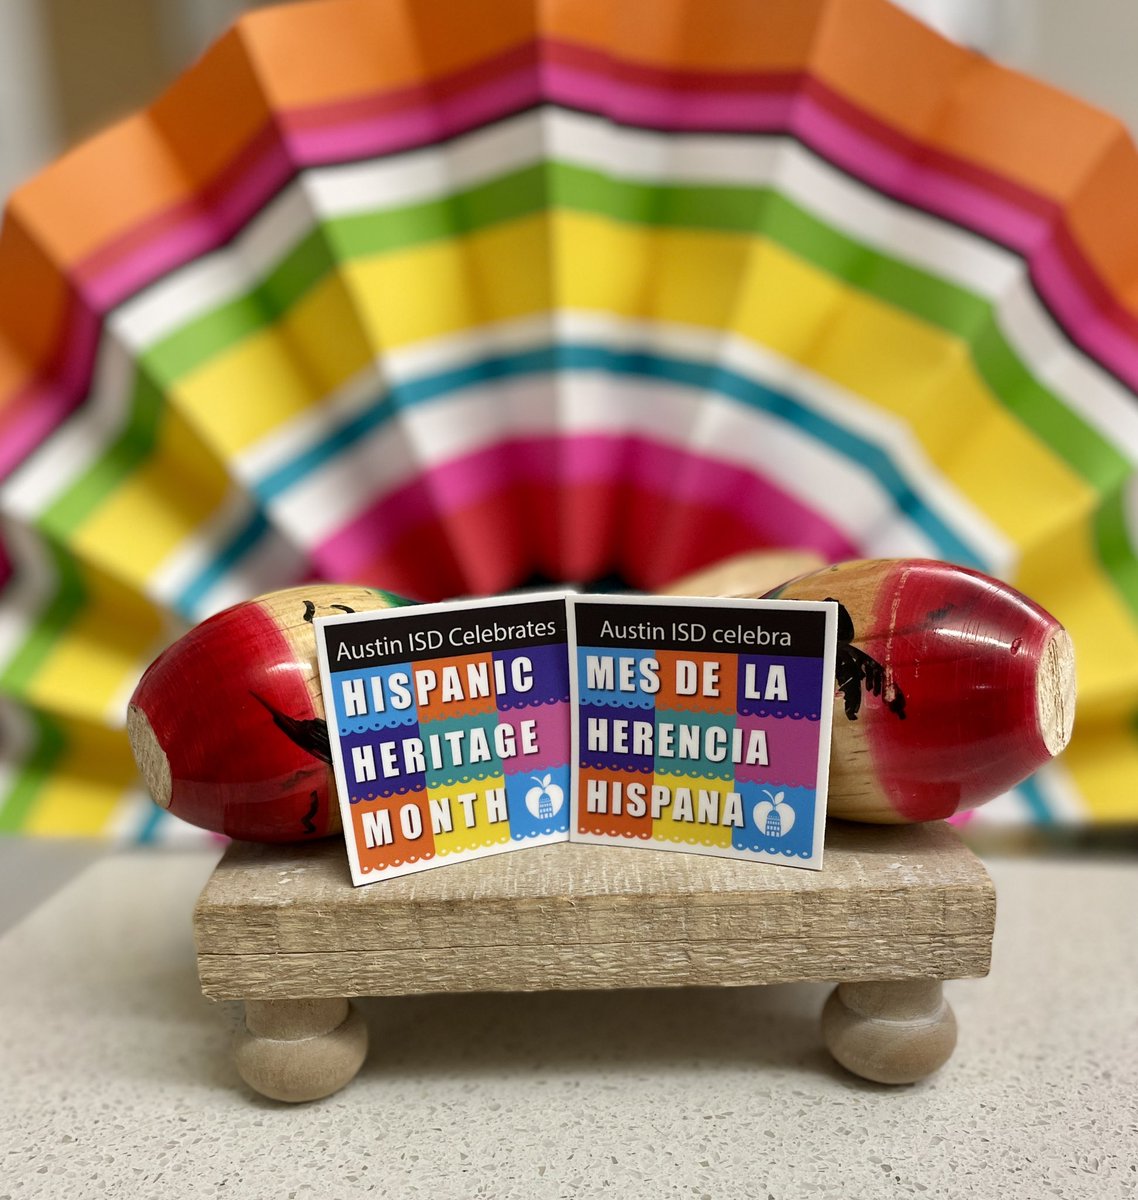 Happy National Hispanic Heritage Month! #SomosAISD